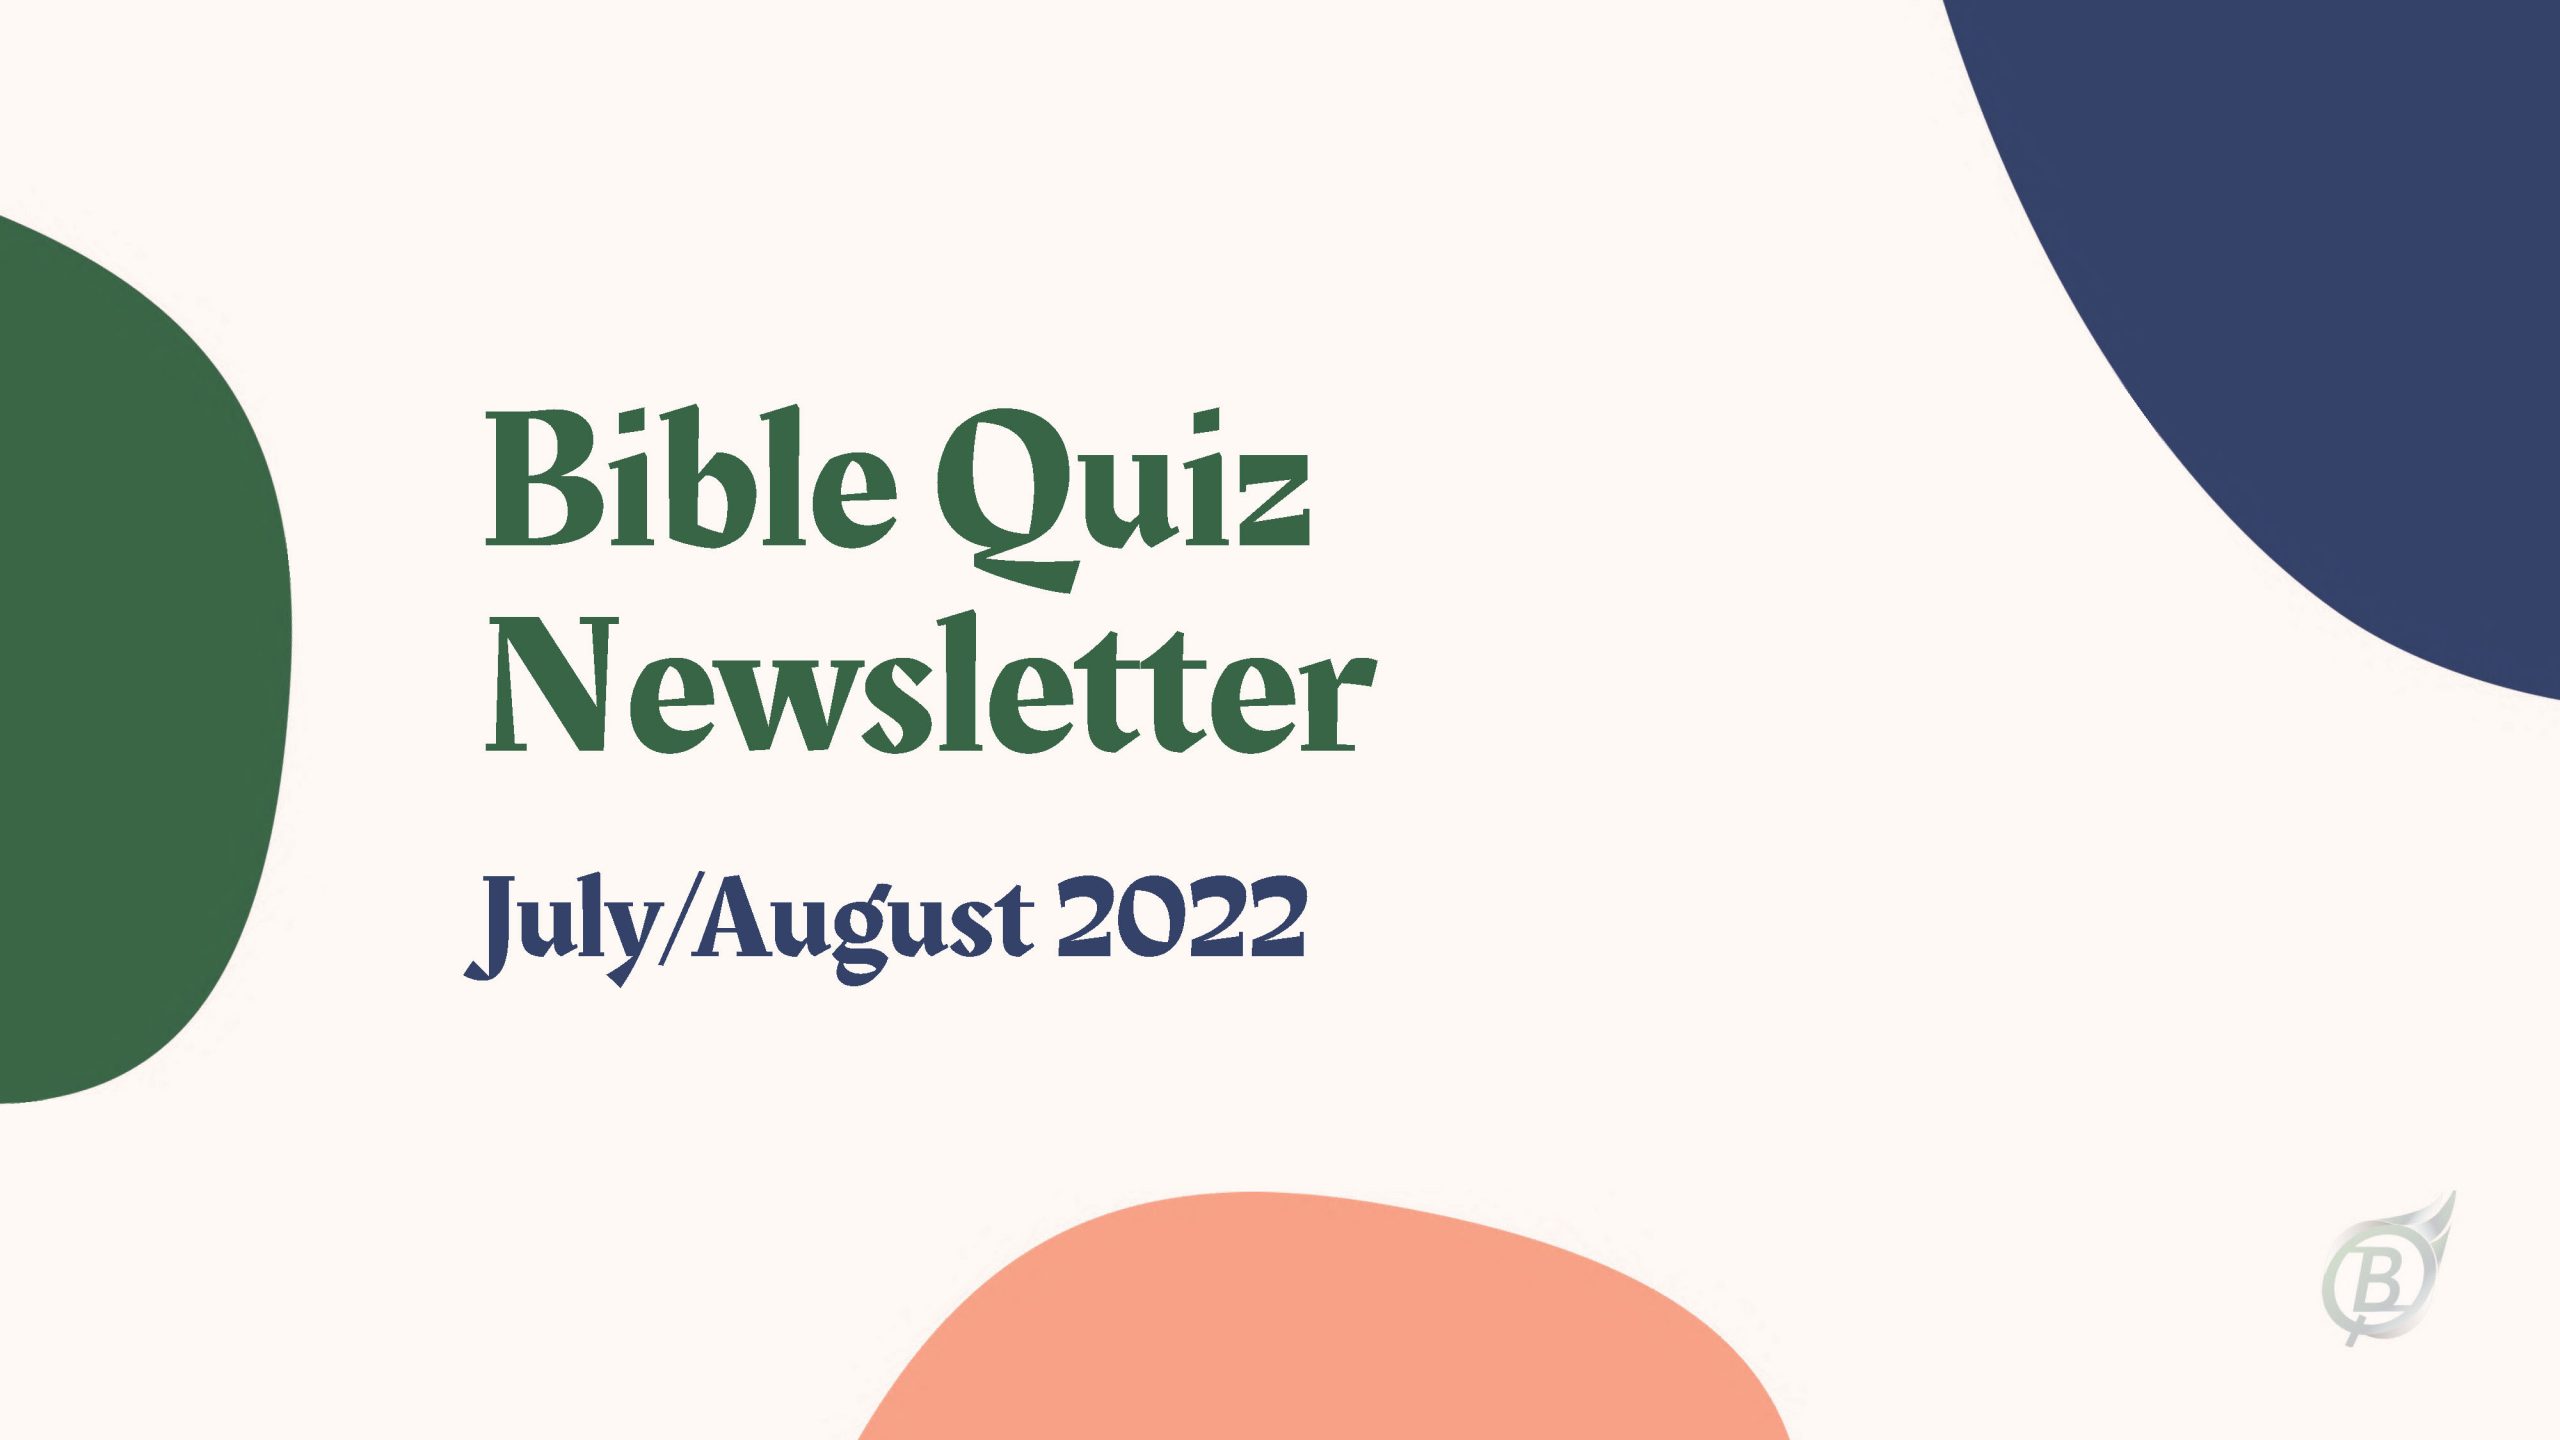 Bible Quiz Newsletter - July/August 2022